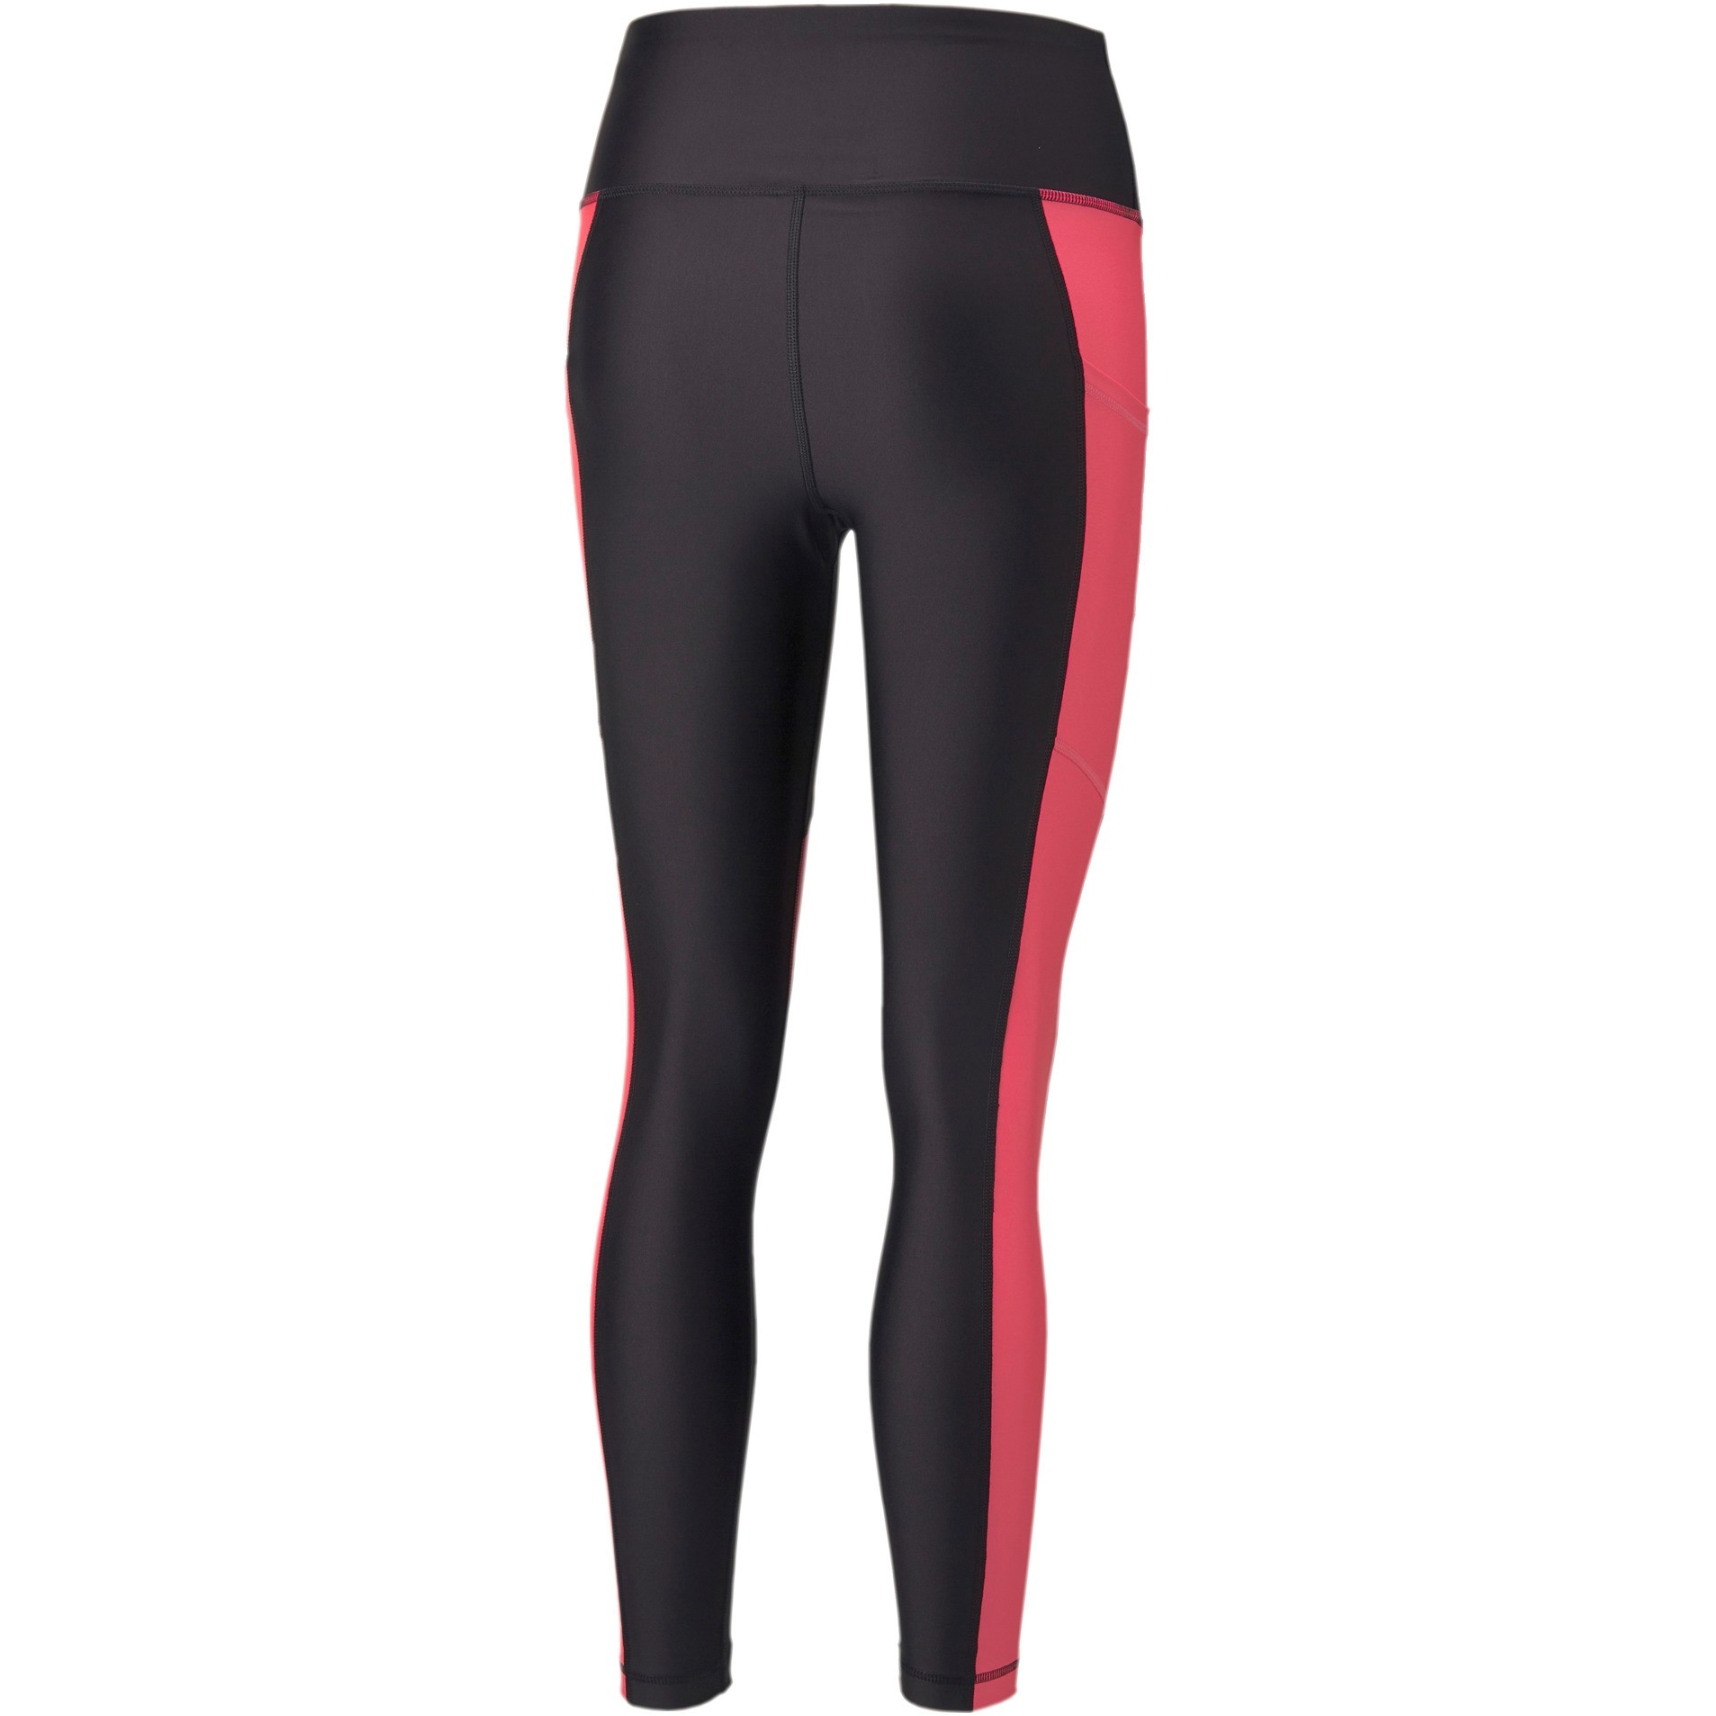 NWT PUMA Runner ID Thermo-R+ Black/Ignite Pink Reflective Leggings XS $70 |  eBay